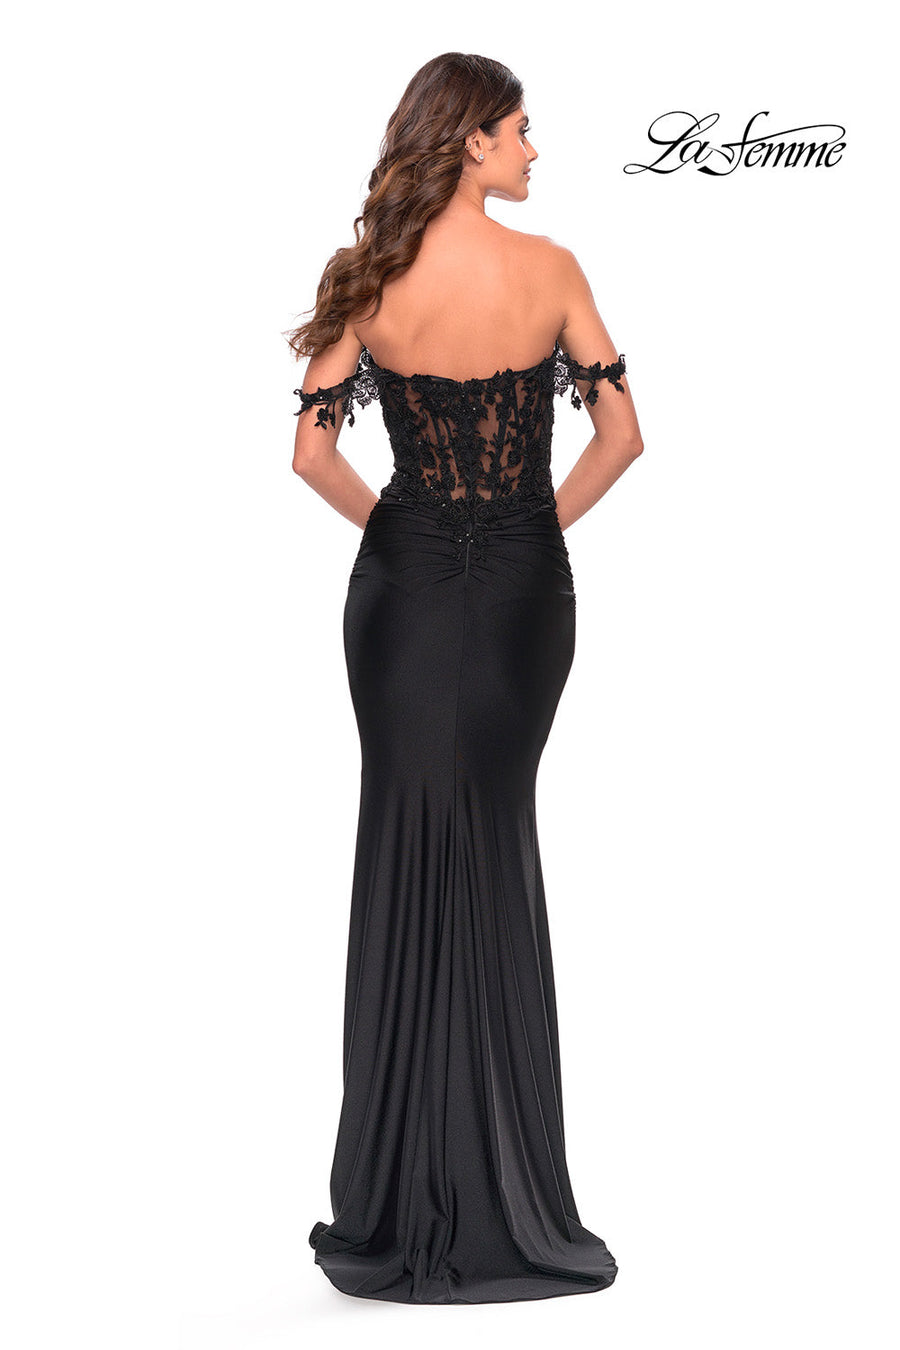 La Femme 31314 prom dress images.  La Femme 31314 is available in these colors: Black.